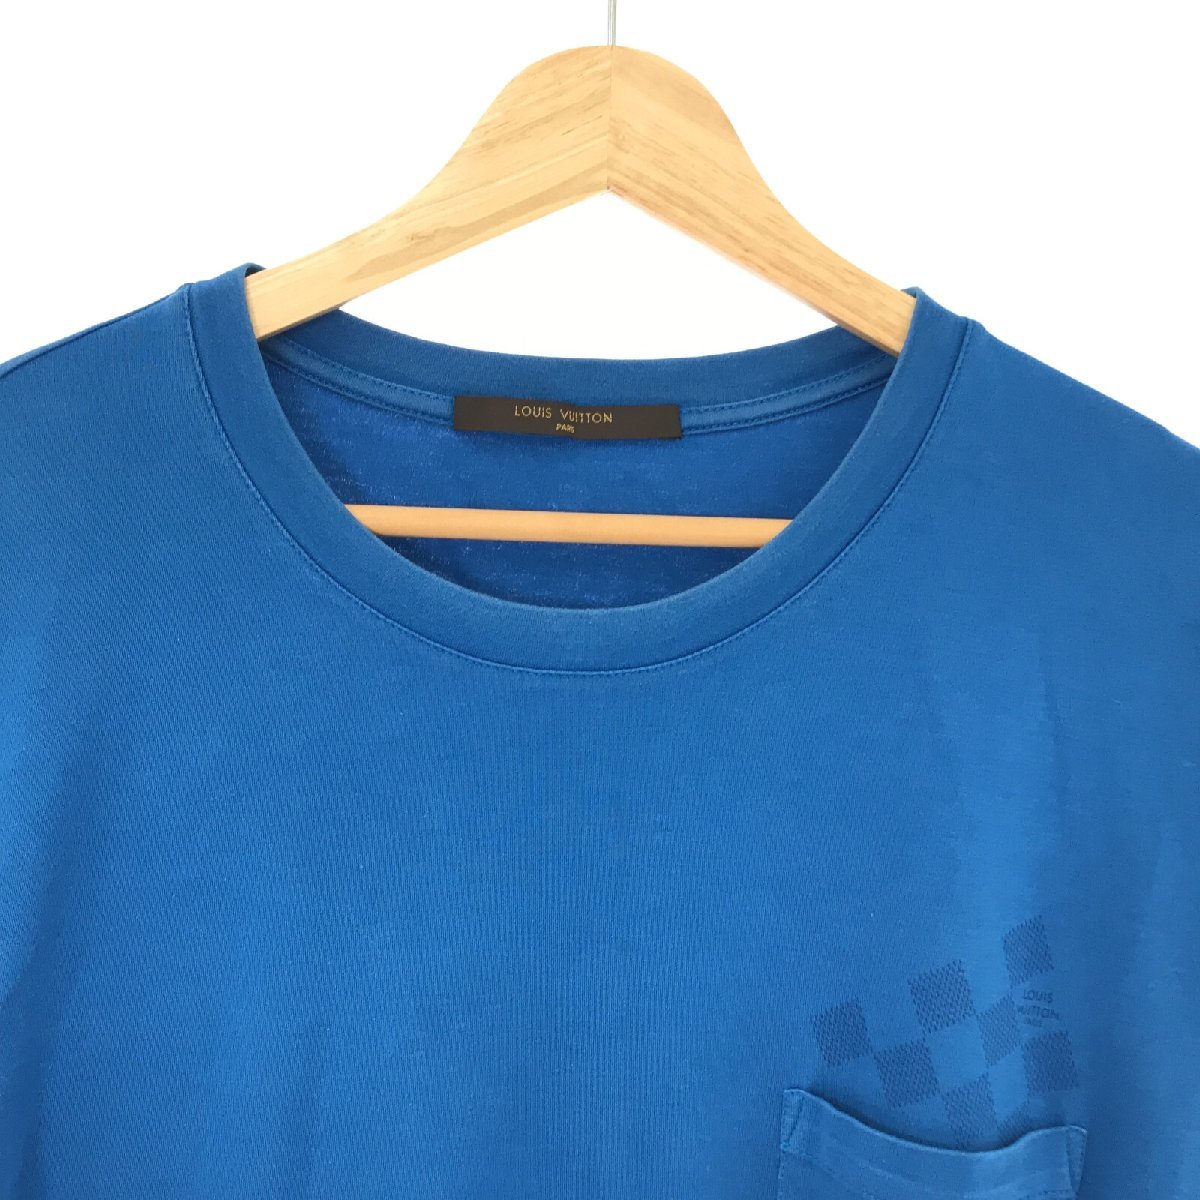 LOUIS VUITTON ルイ・ヴィトン 半袖Tシャツ Tシャツ ブルー系 中古 ユニセックス_画像3